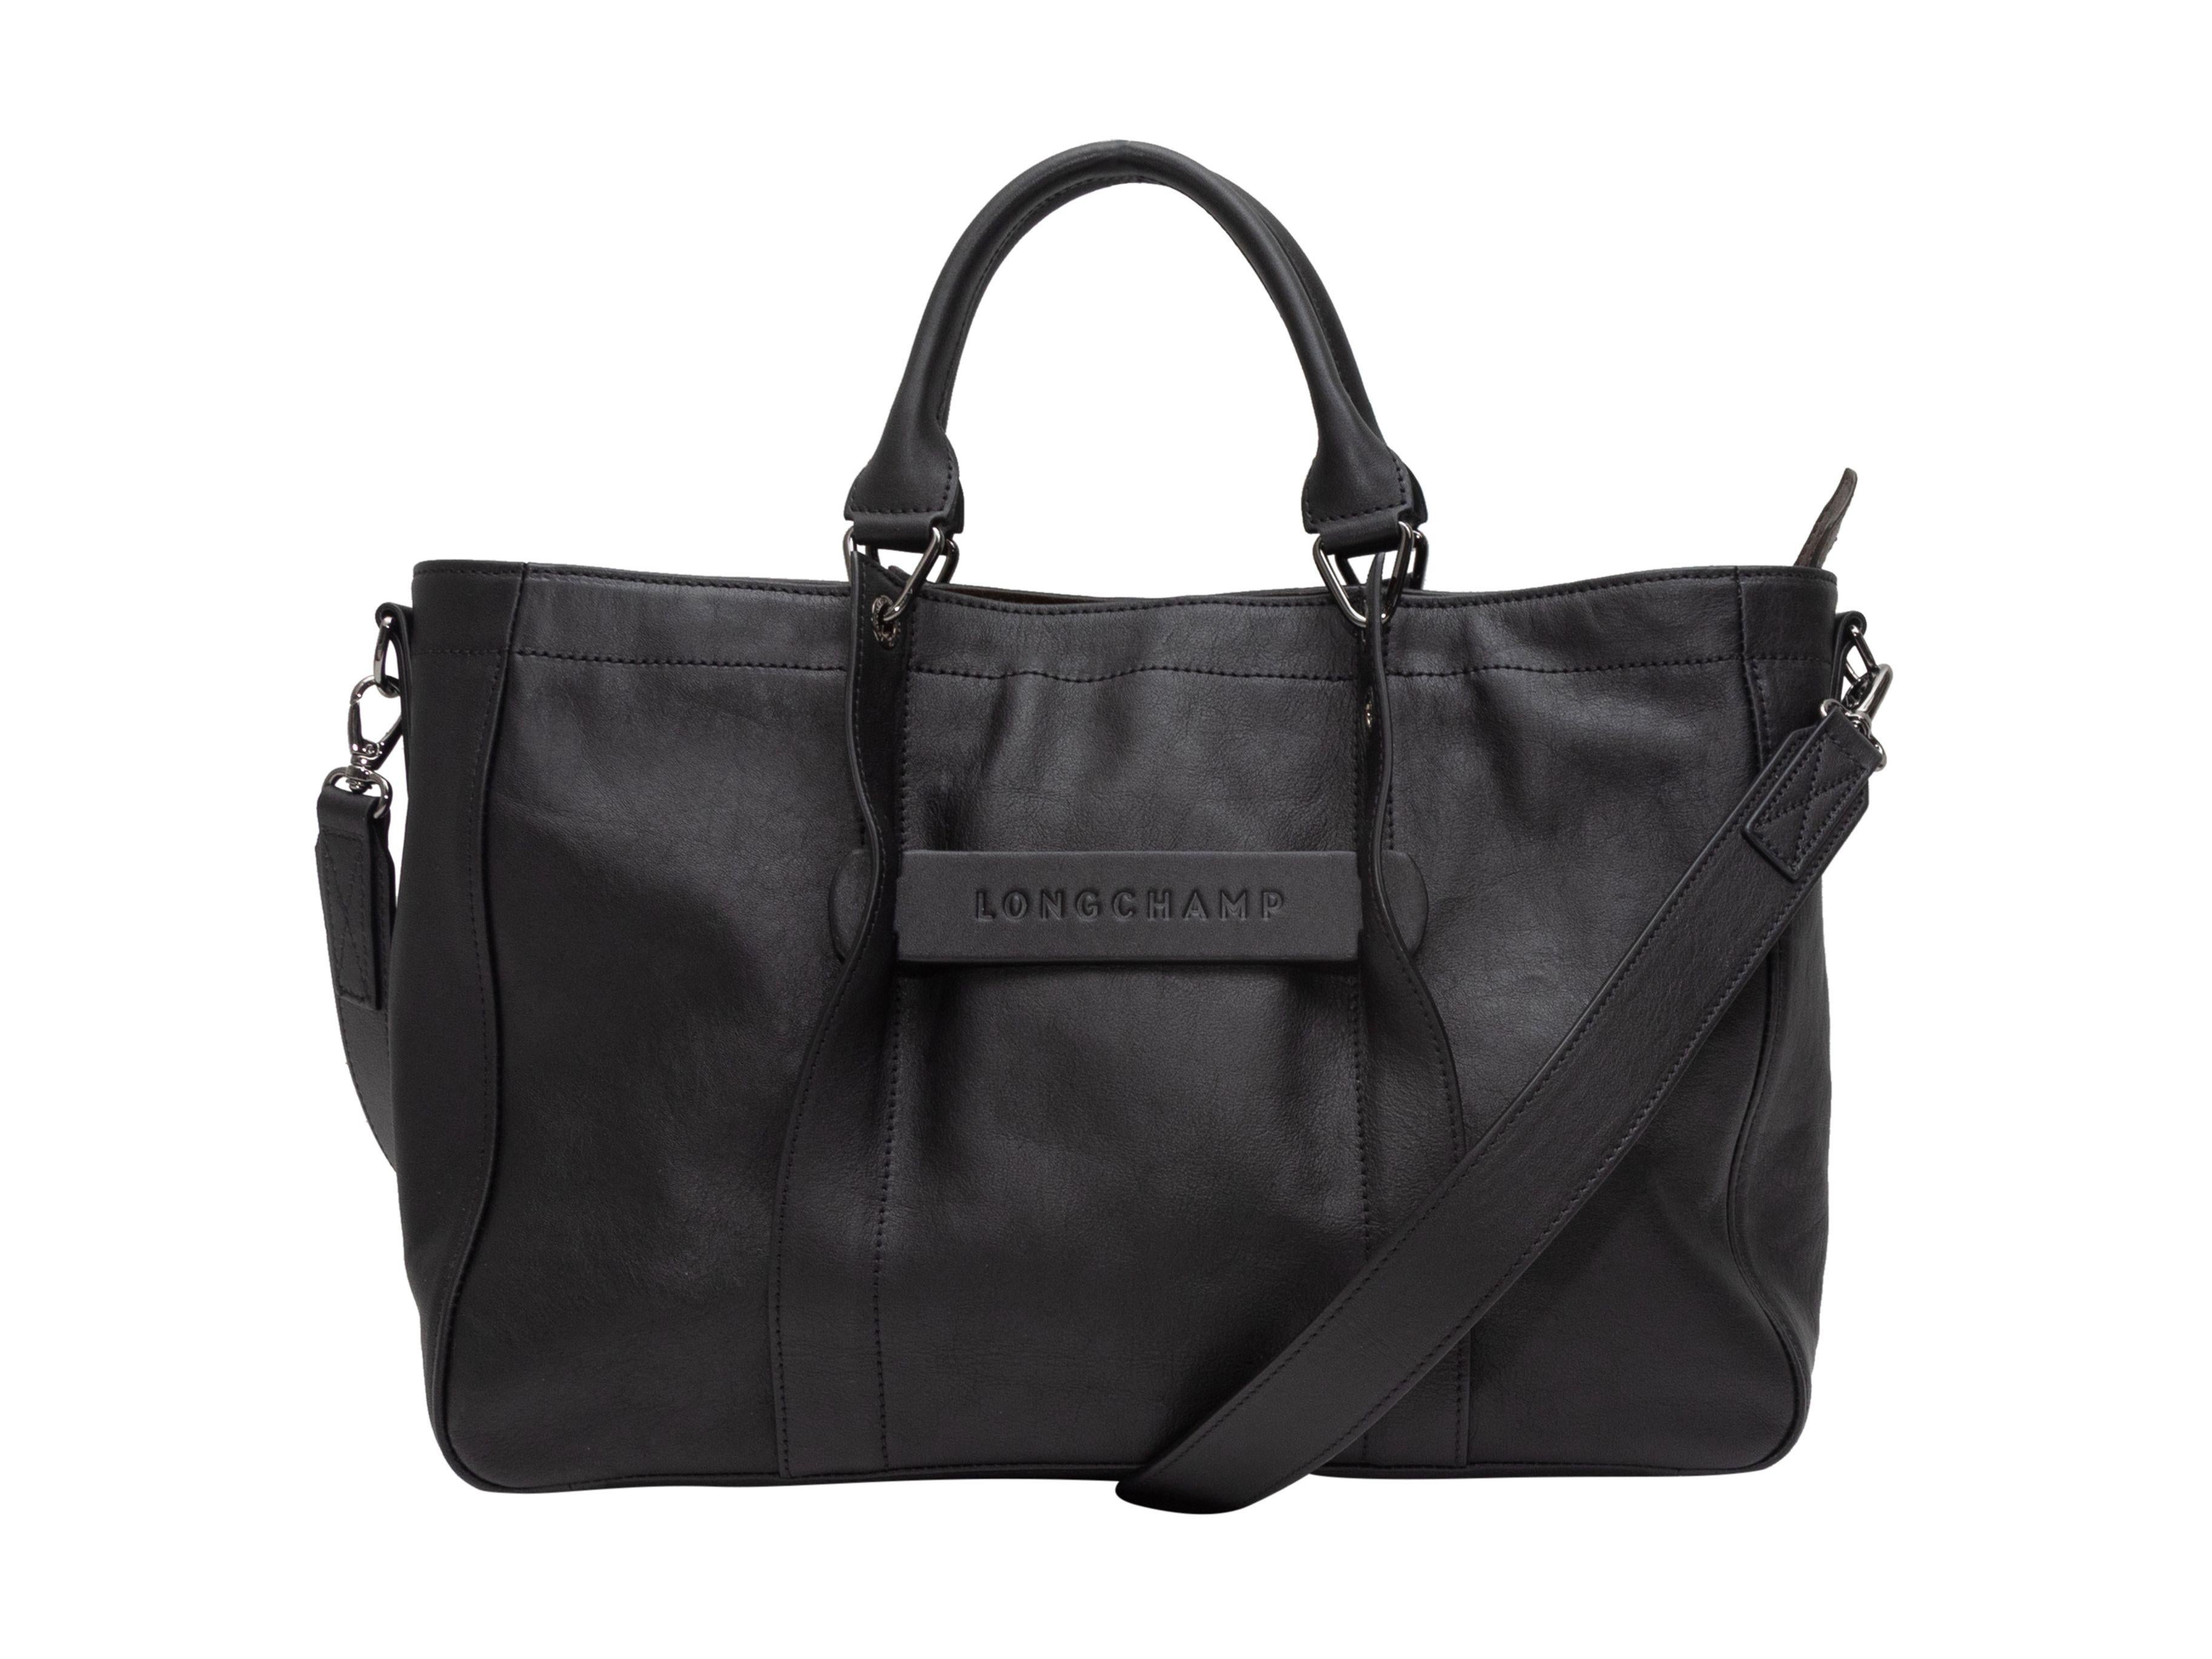 Women's Longchamp Black Leather Top Handle Tote Bag